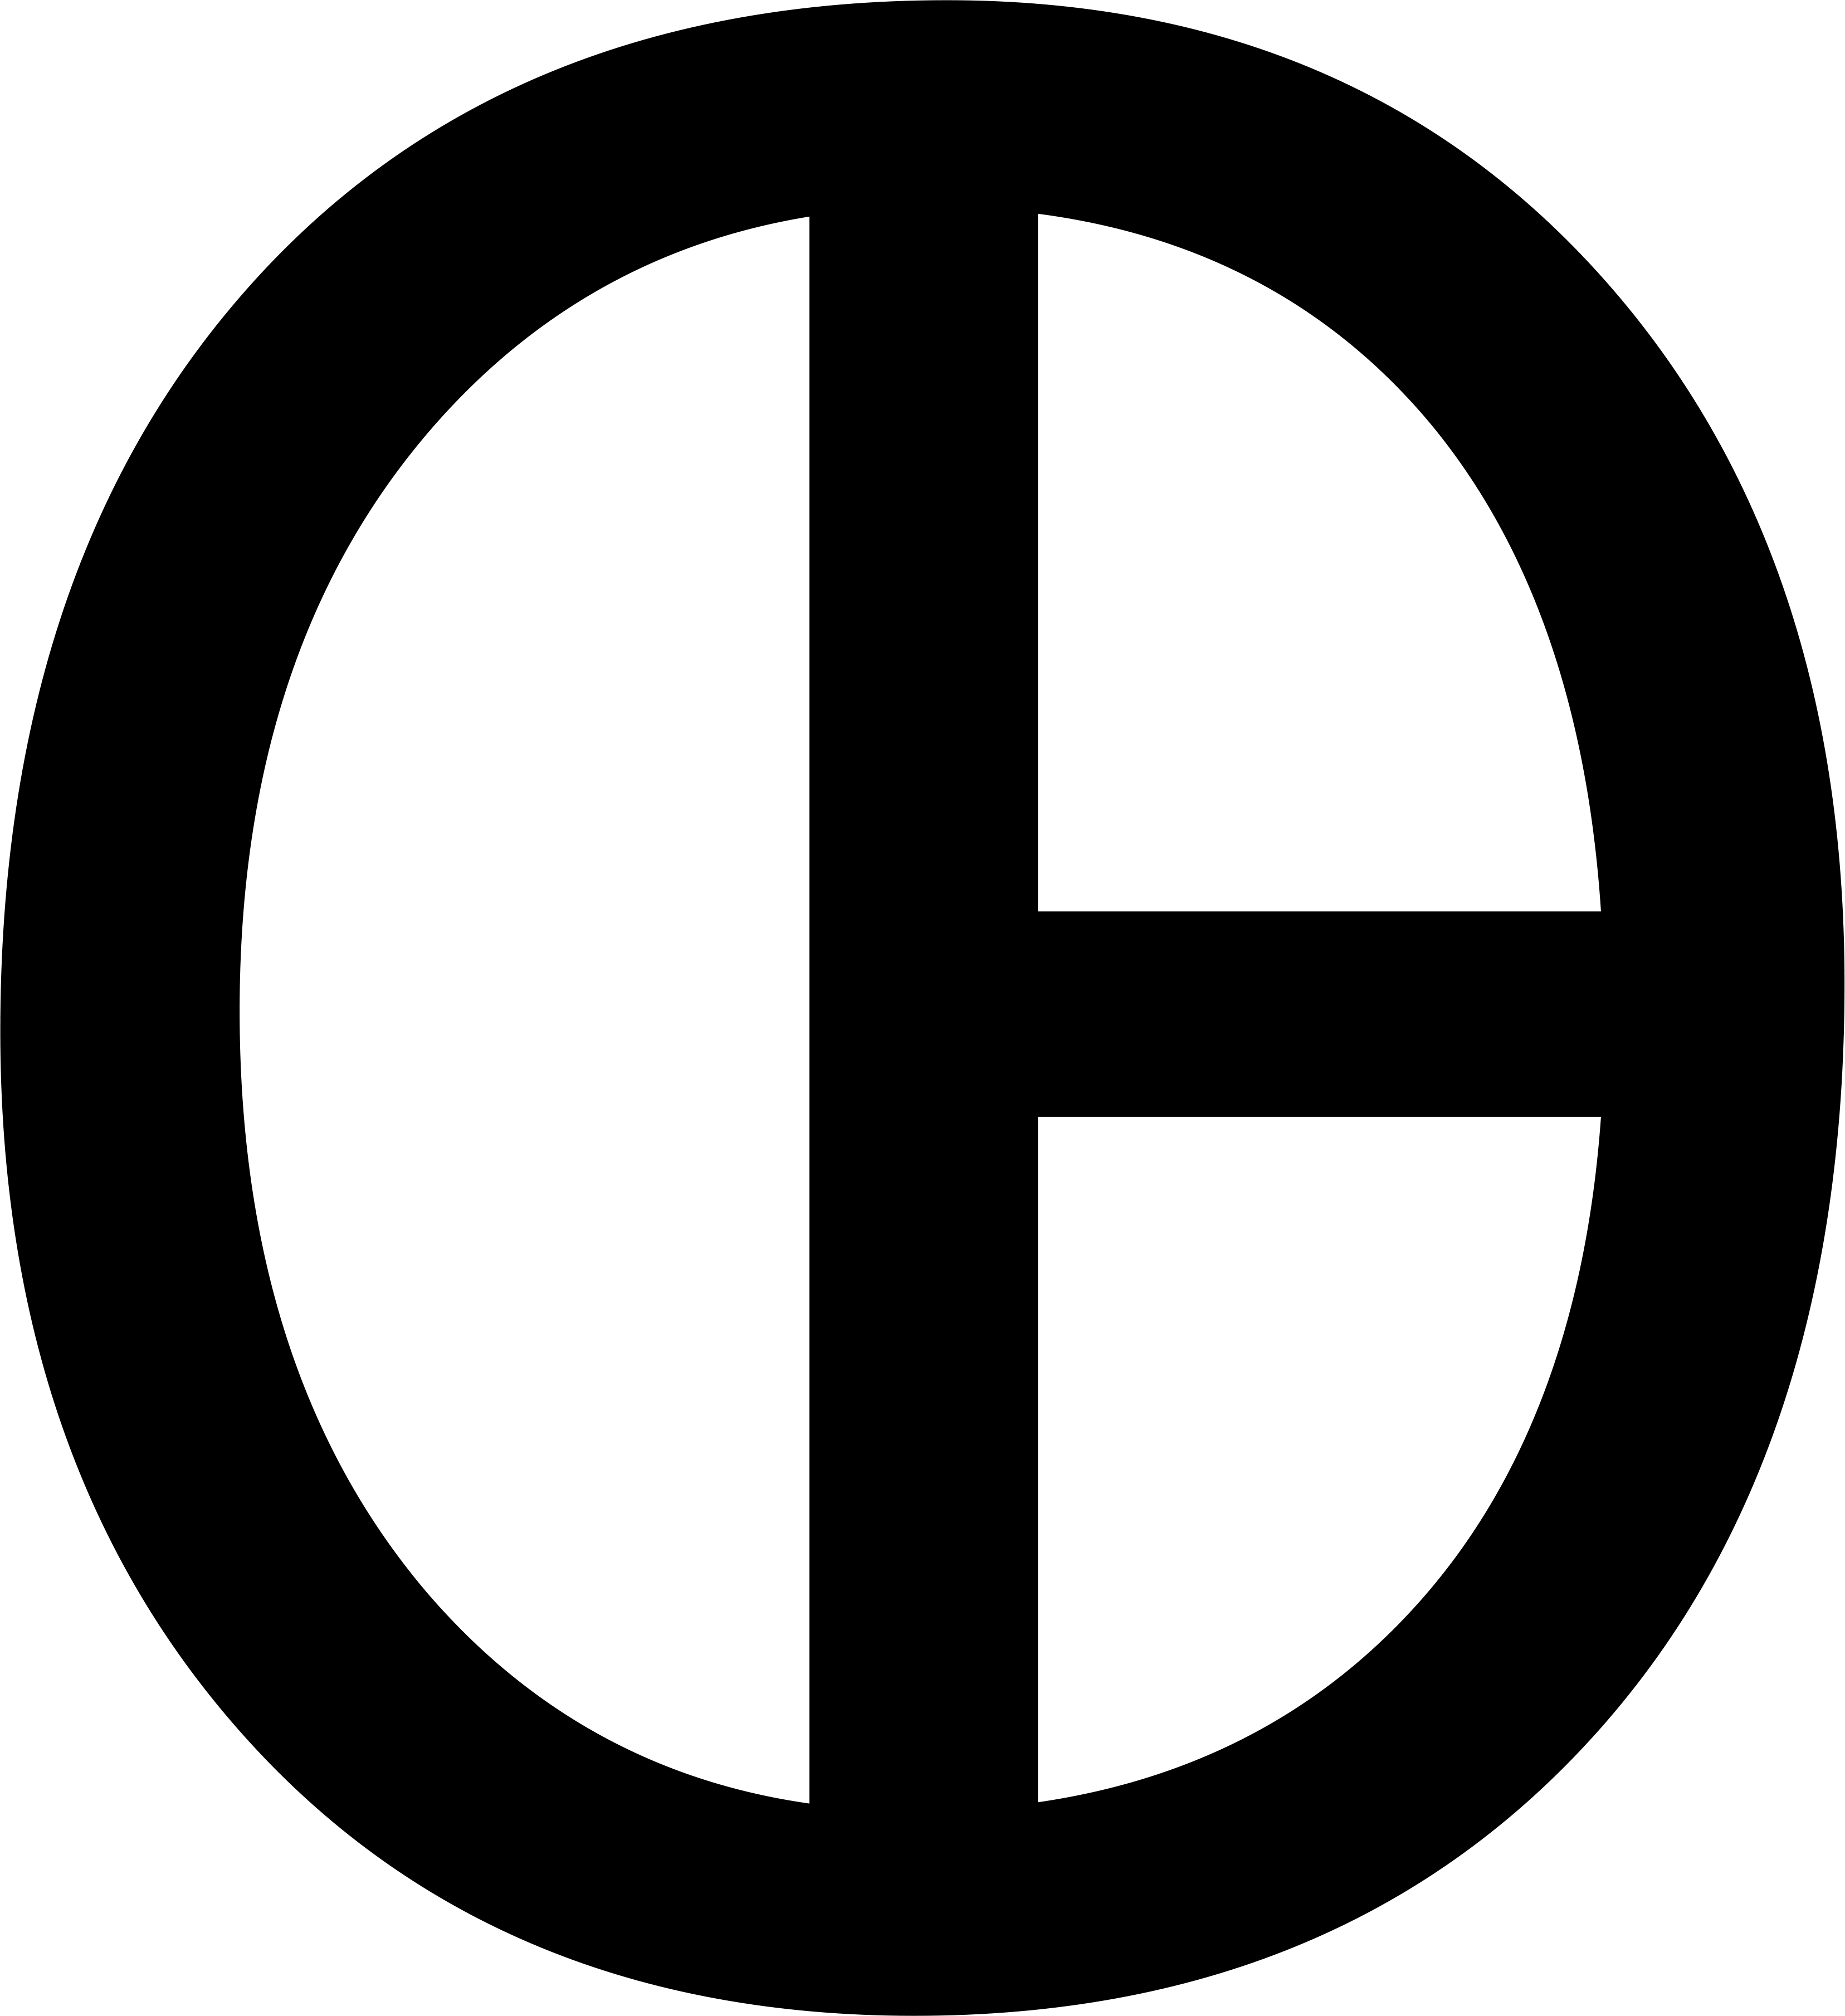 Alchemical symbol for vitriol by Pride-Flags on DeviantArt